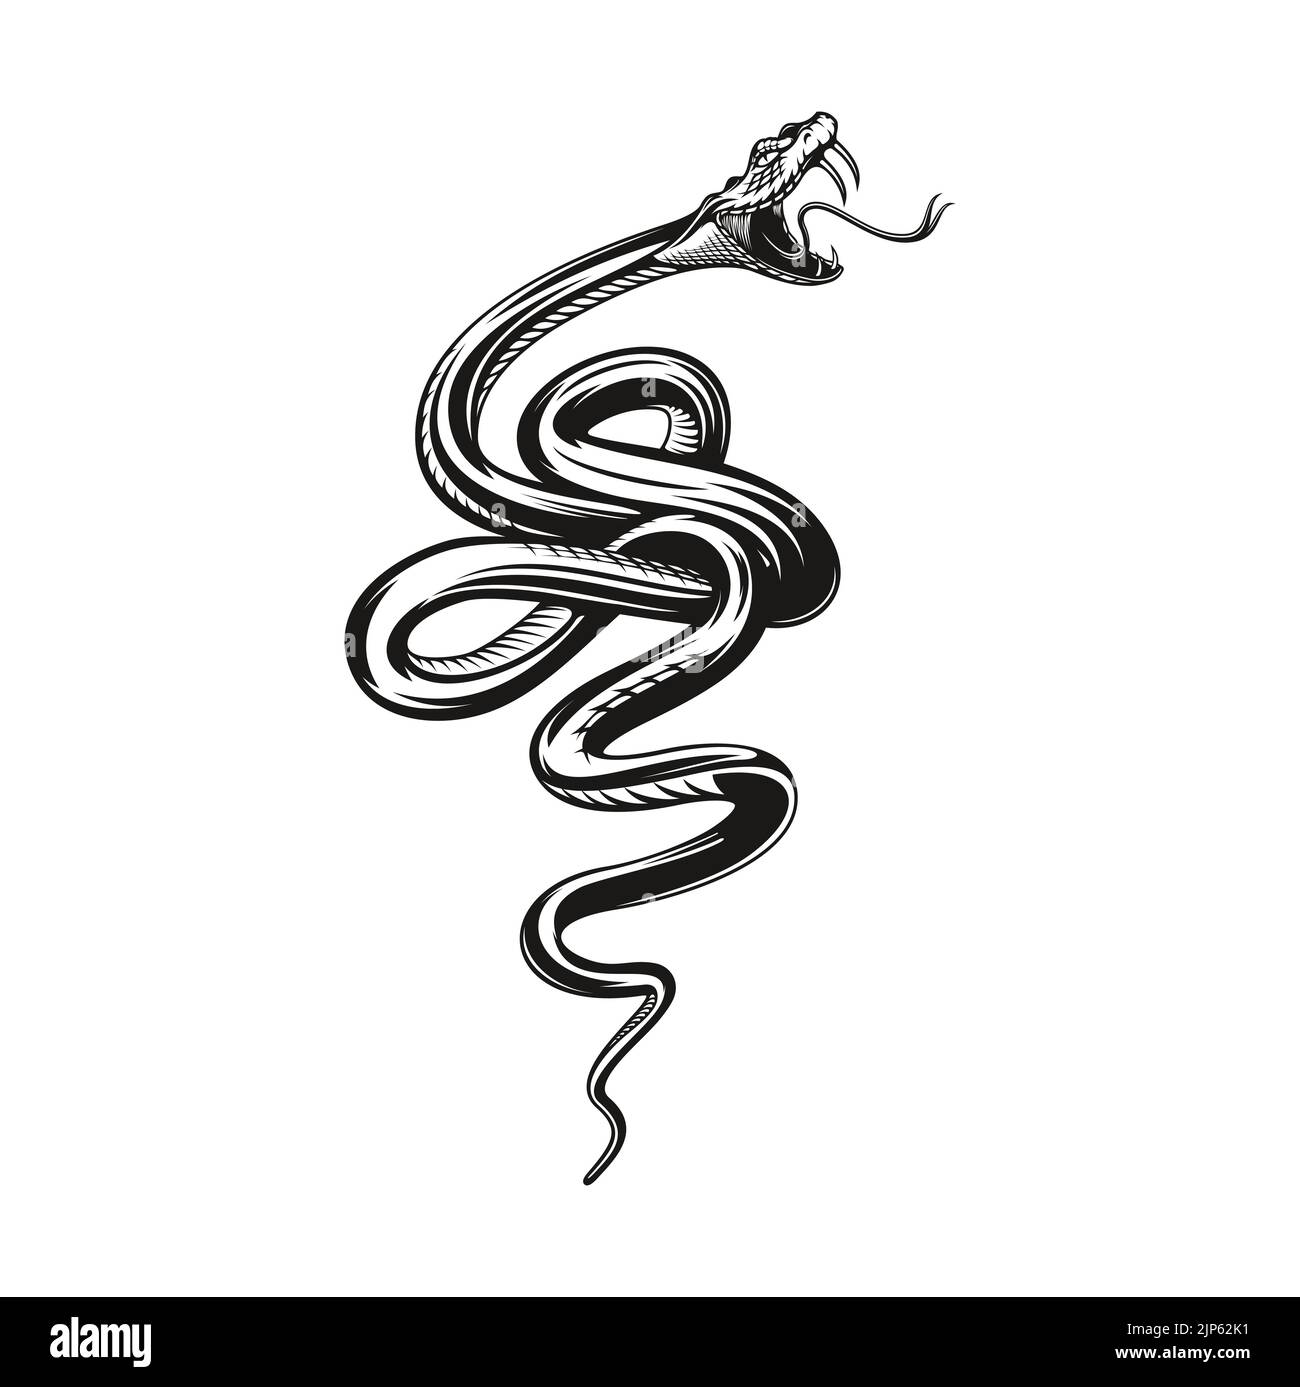 Snake Tattoo Design | Cobra Art